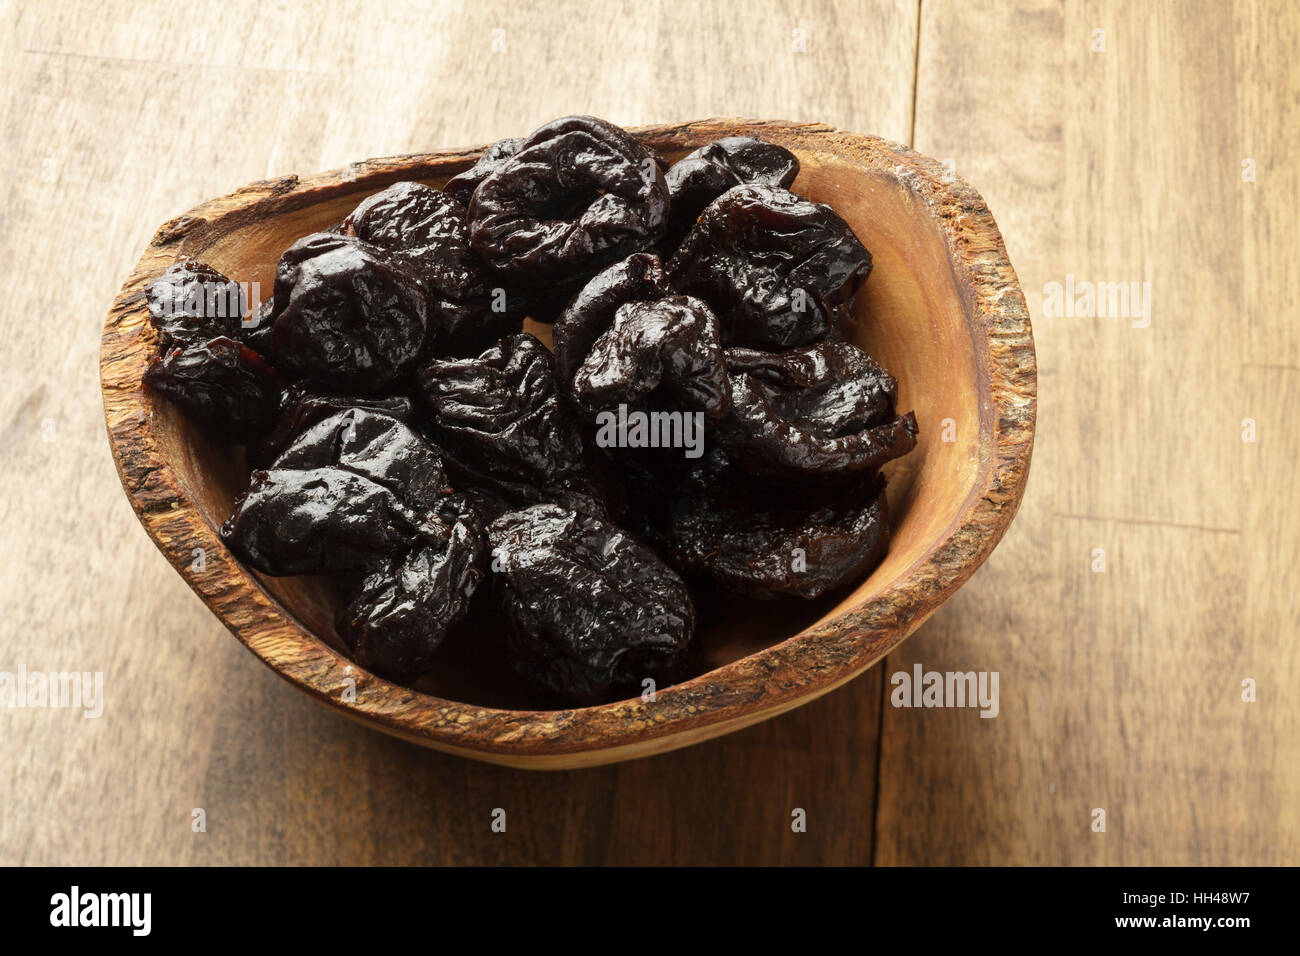 Prunes in wooden bowl Stock Photo